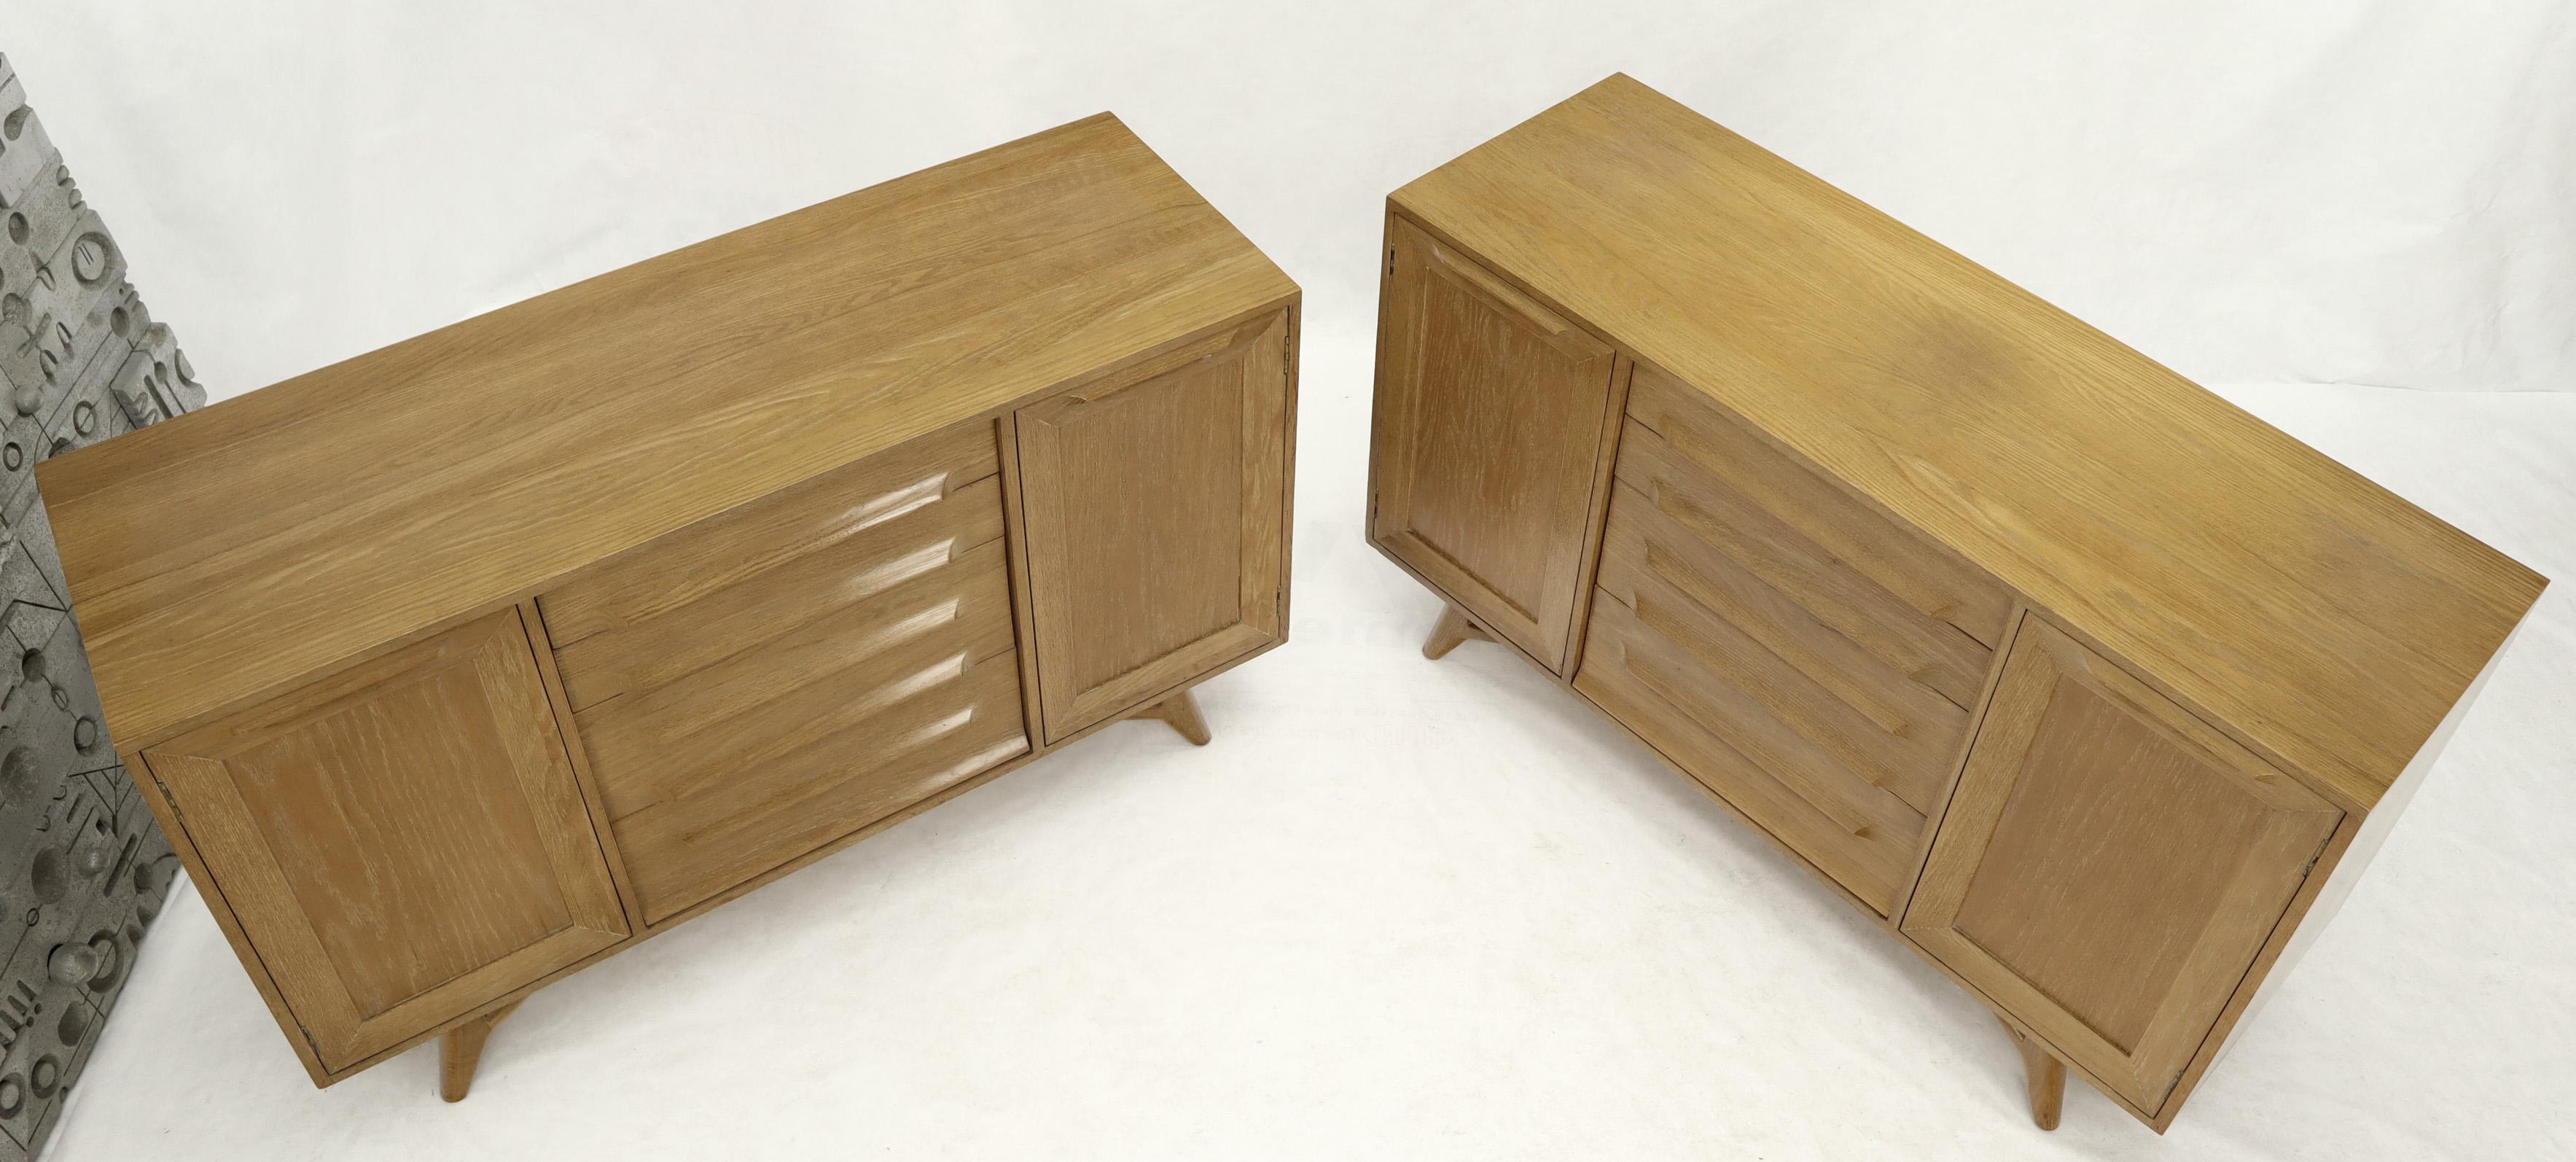 Two Door 4 Drawer Limed Cerused Solid Oak Board Cabinet Credenza Dresser In Good Condition For Sale In Rockaway, NJ